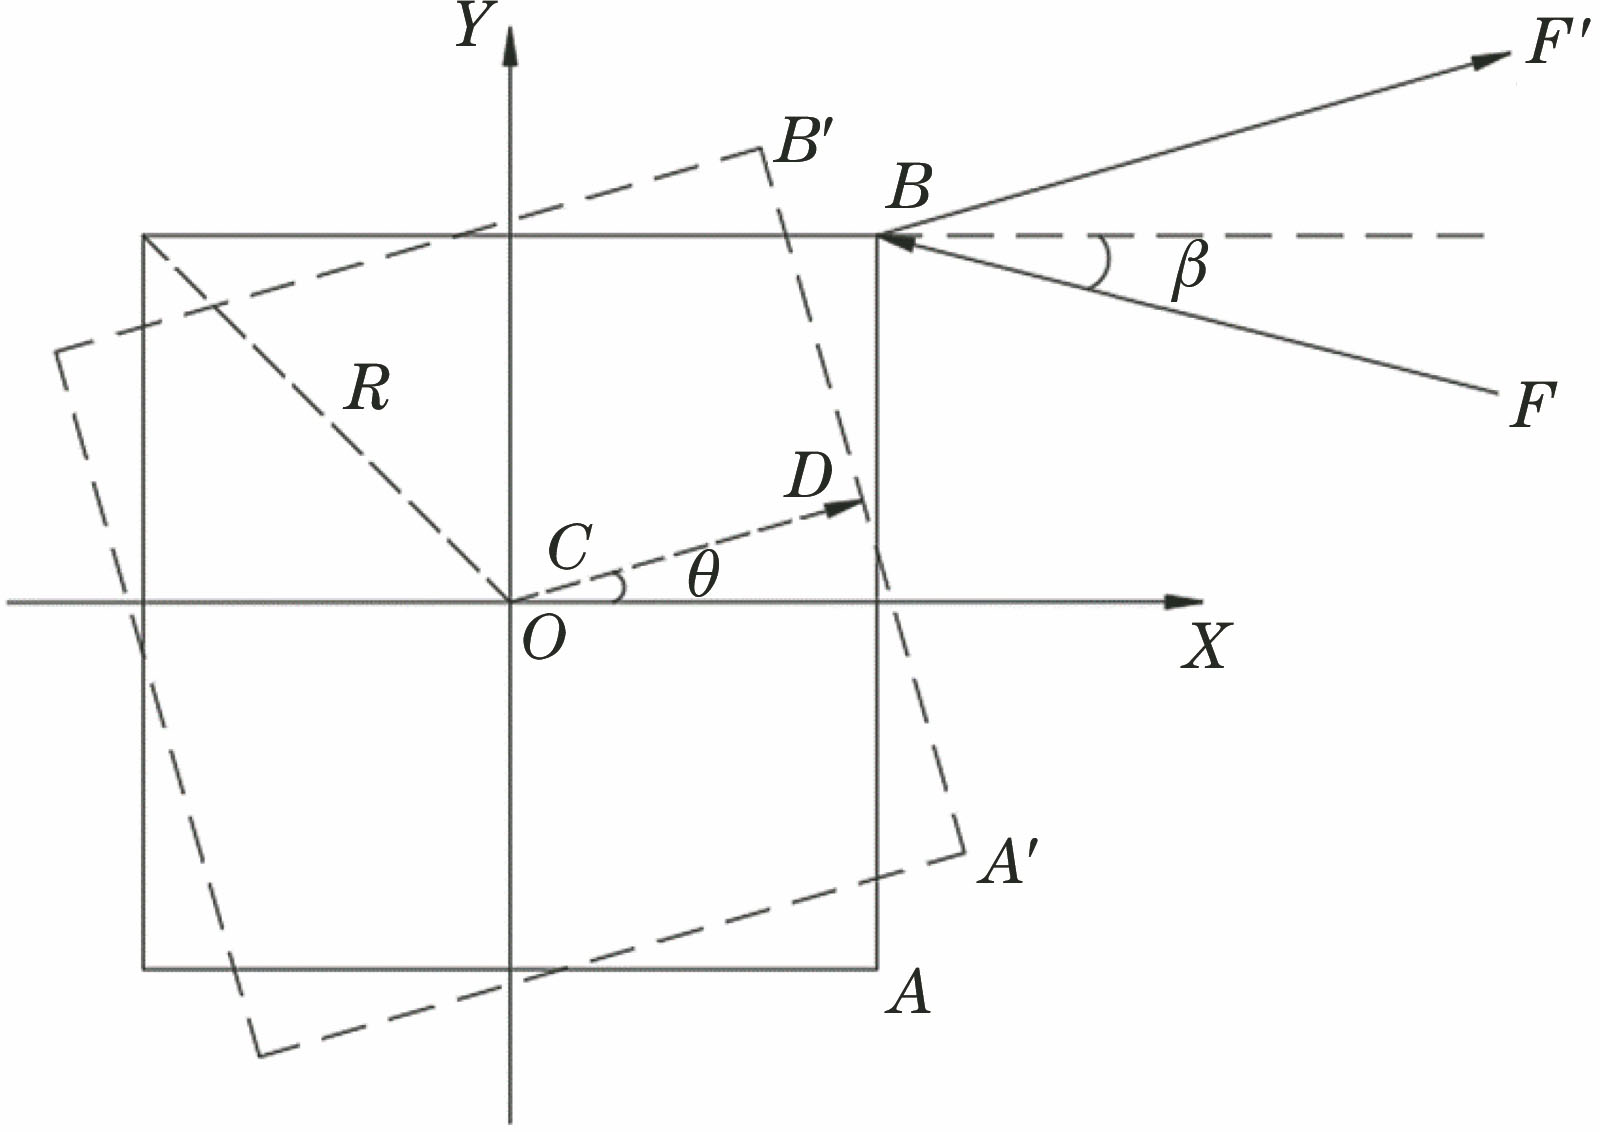 Schematic diagram of the tetrahedron scanning mirror